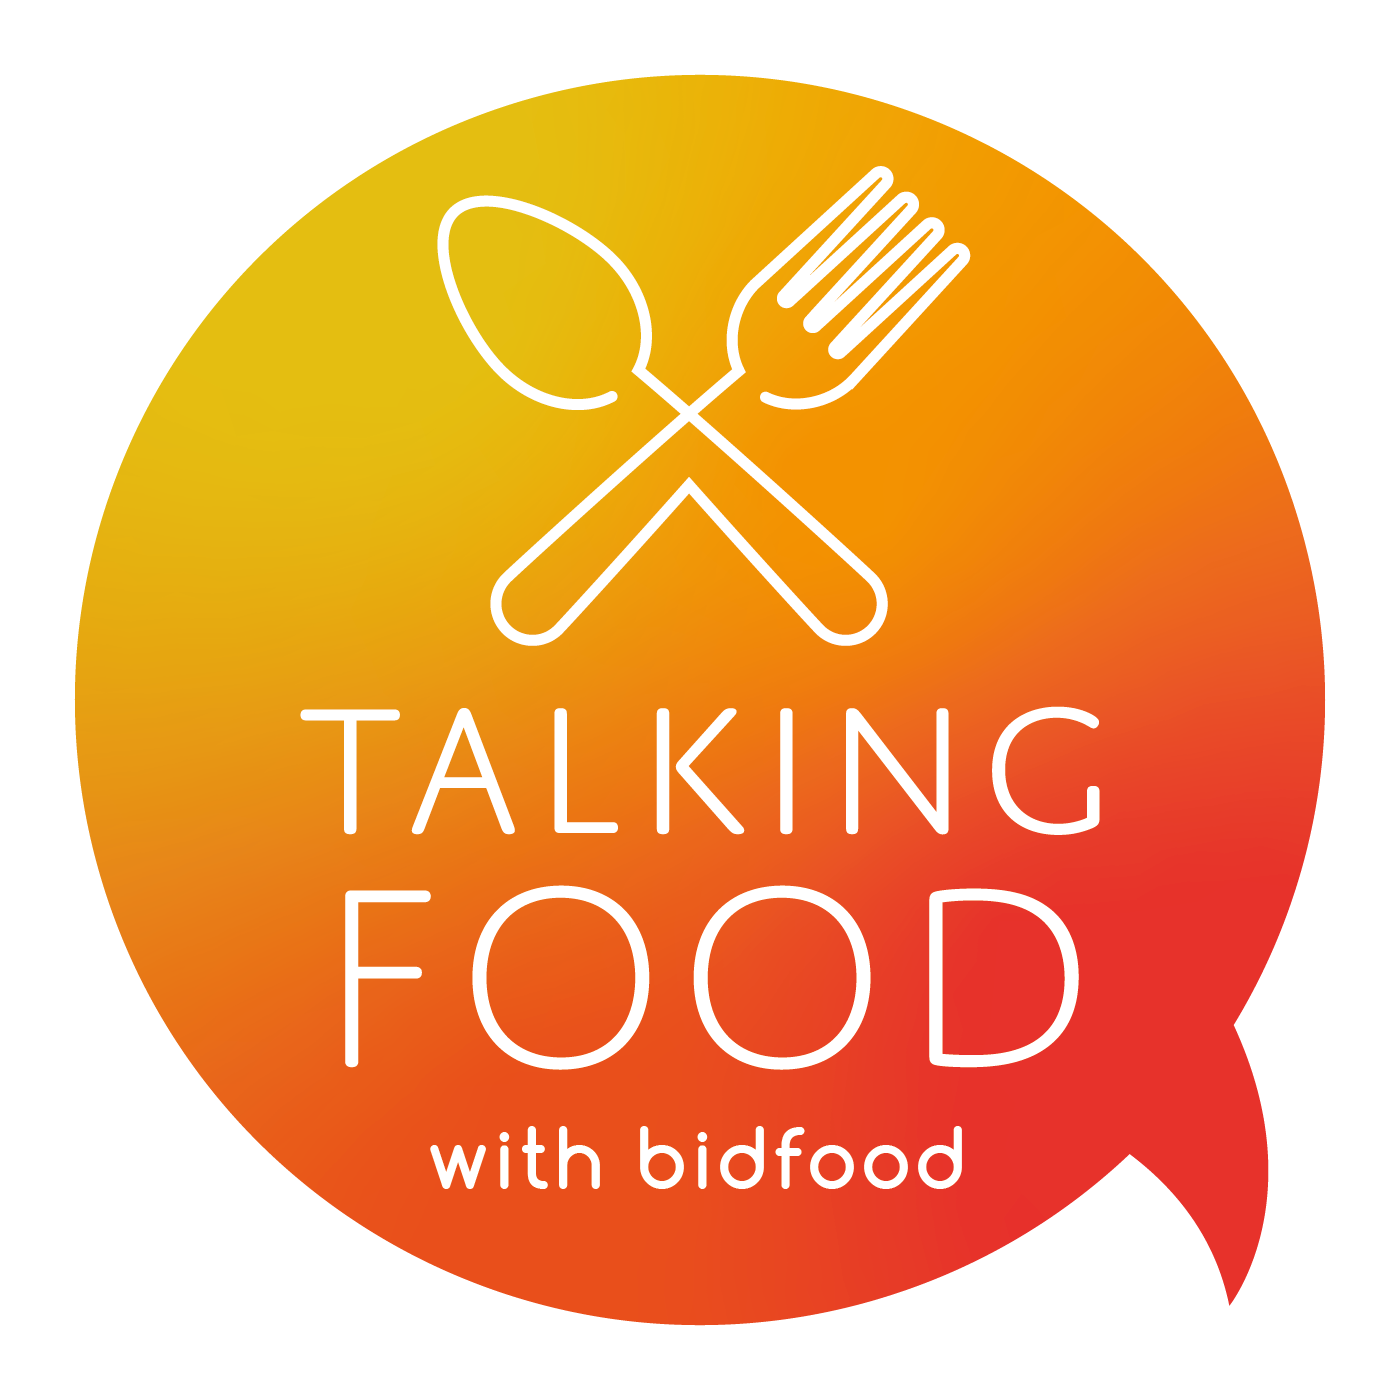 Talking food with Bidfood